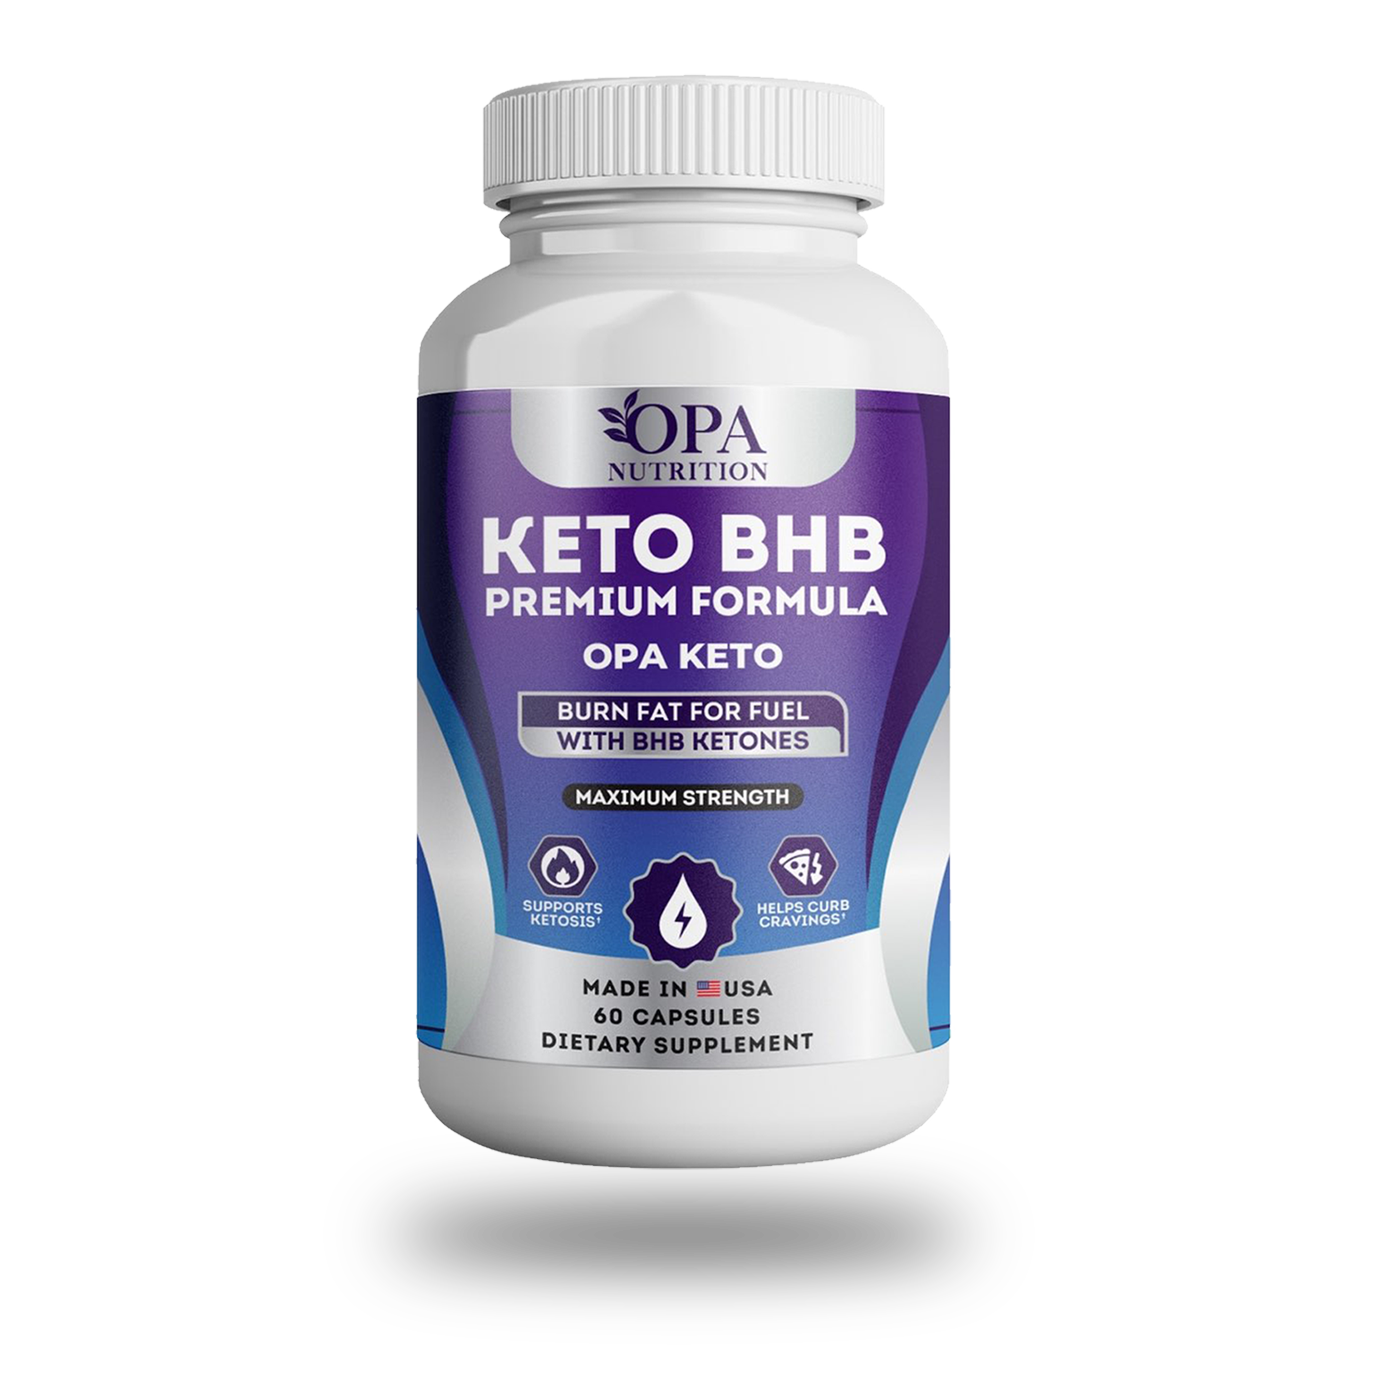 KETO BHB SALT PILLS TO BOOST KETOGENIC WEIGHT LOSS - 60 CT